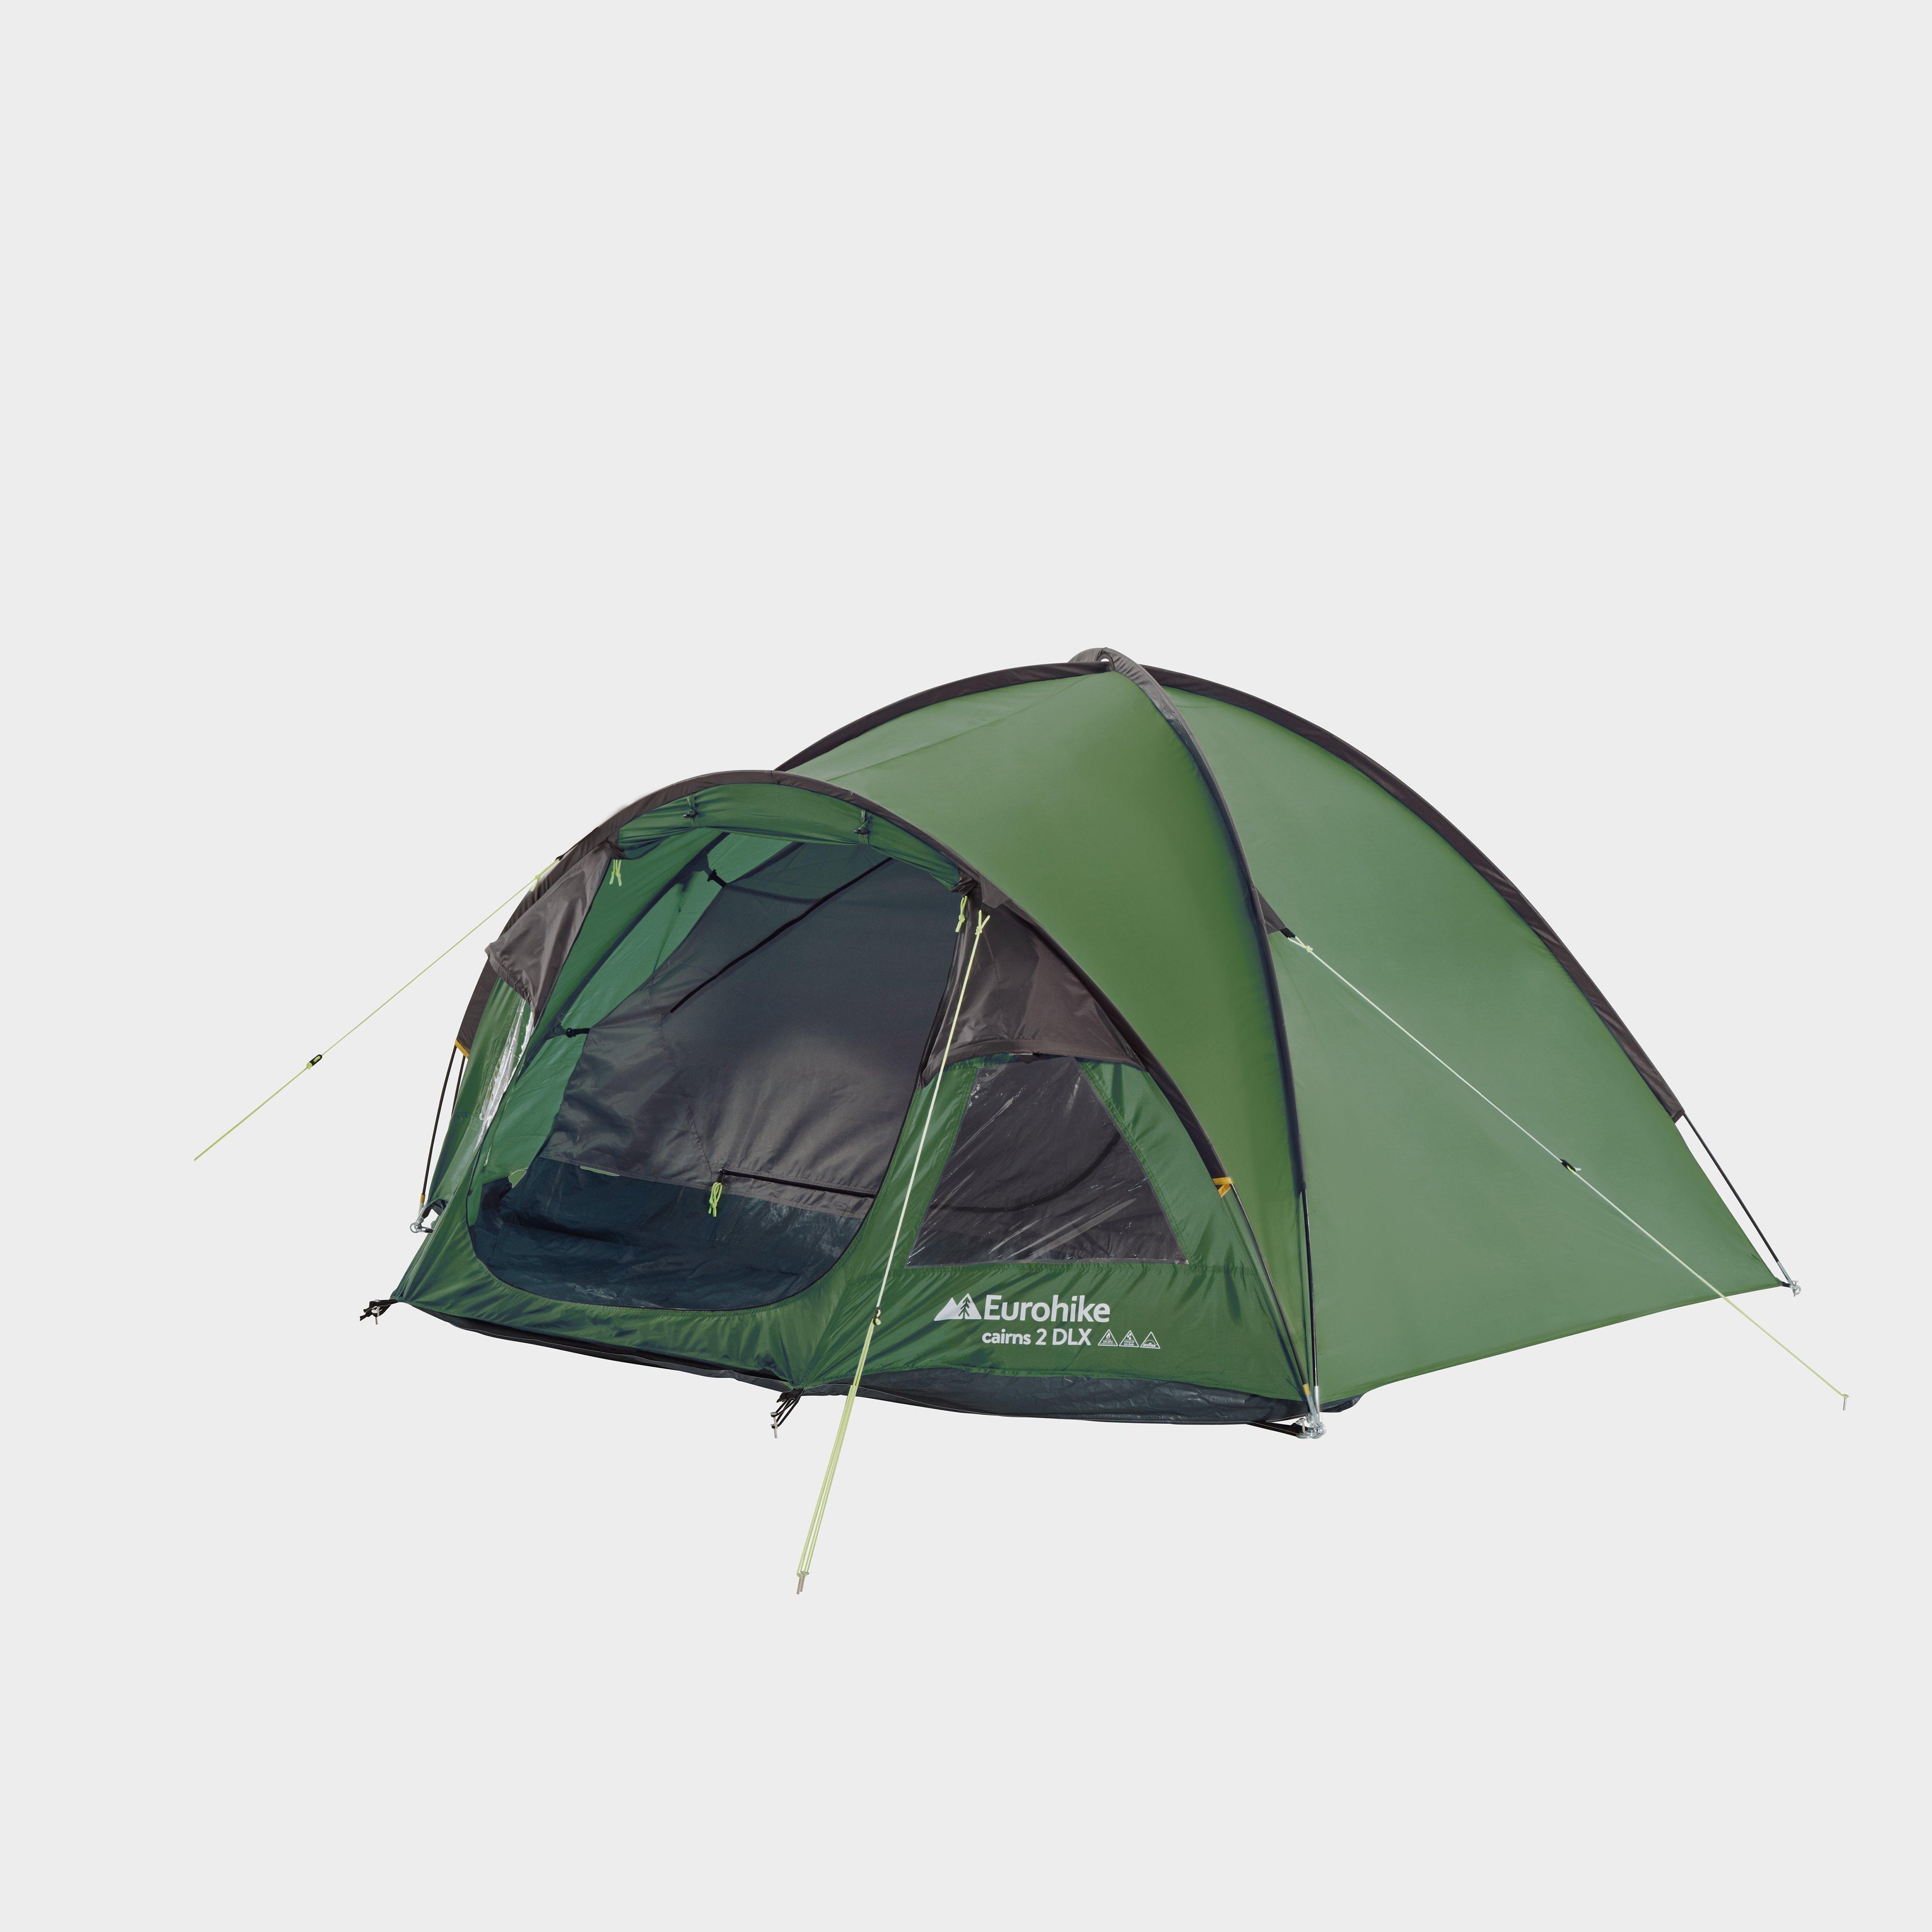  Eurohike Cairns 2 DLX Nightfall Tent, Green